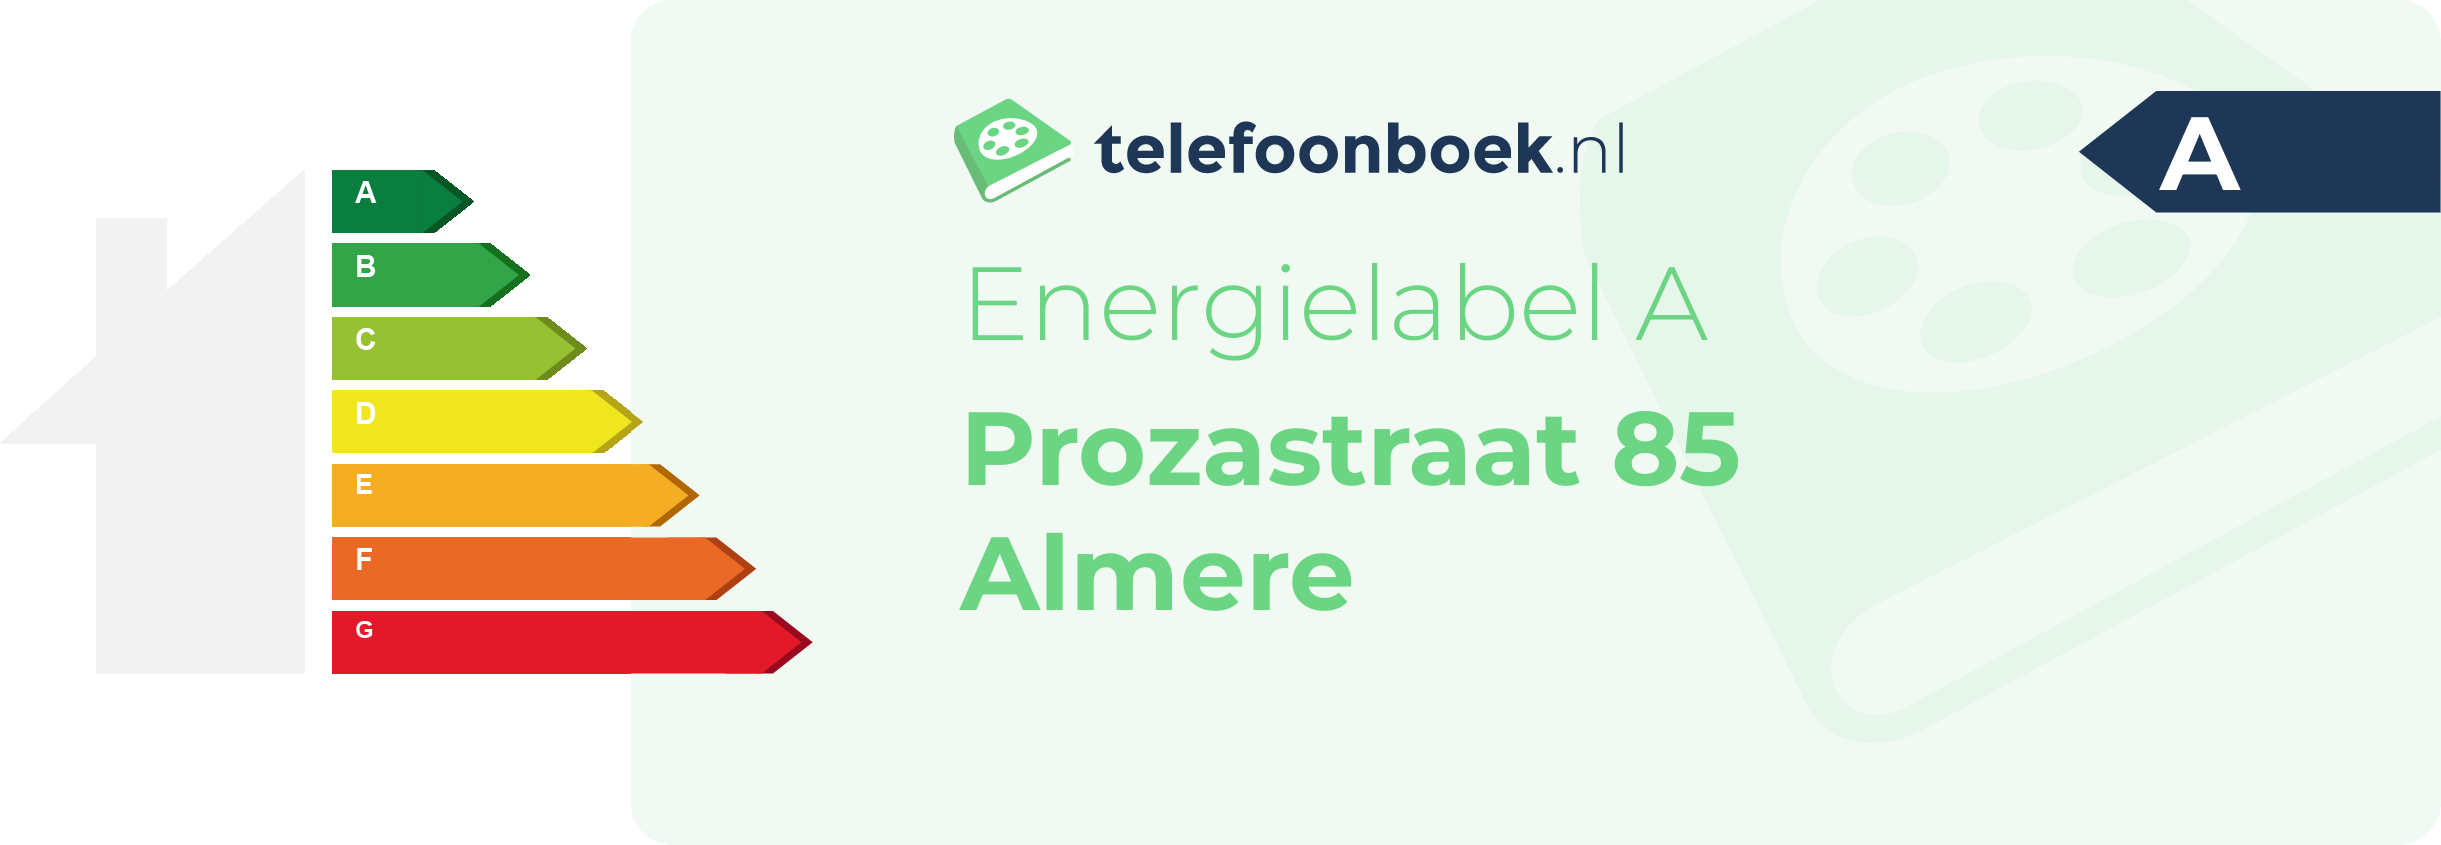 Energielabel Prozastraat 85 Almere